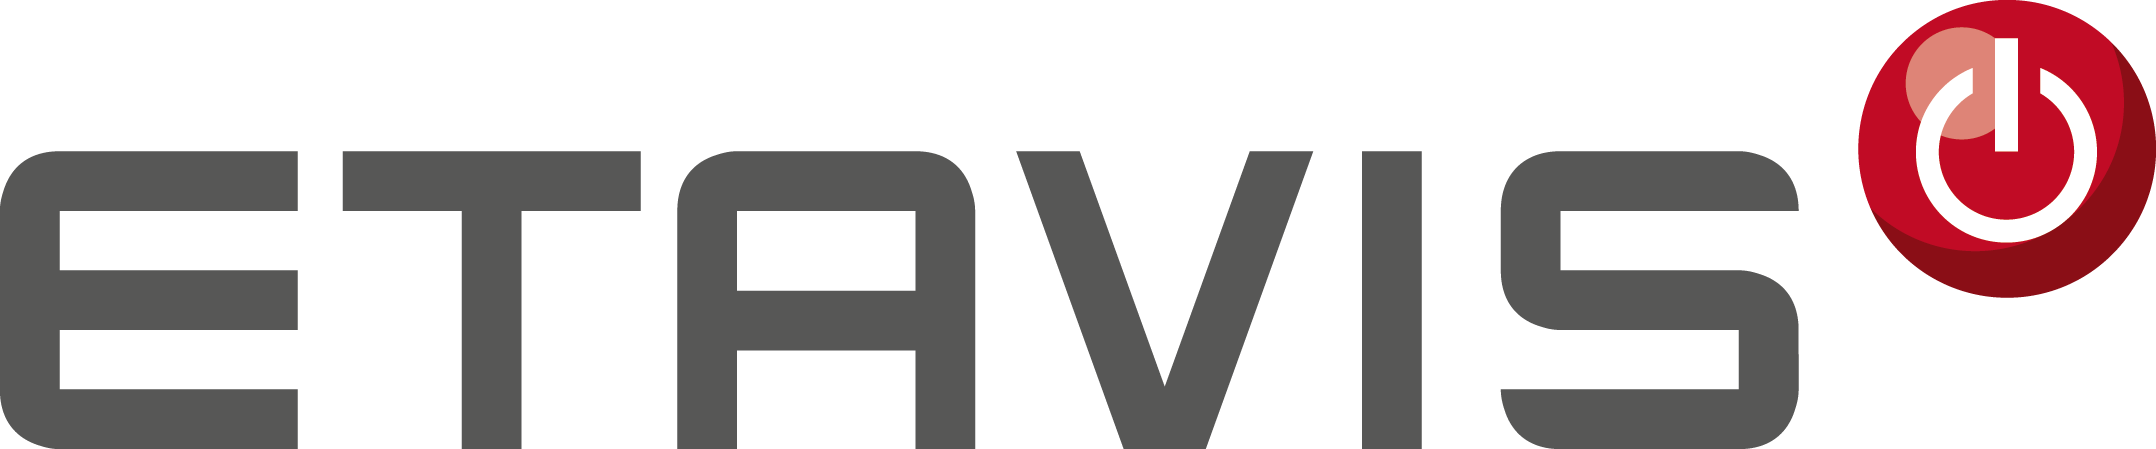 Logo Etavis AG Trägerschaftsmitglied der ABB Technikerschule